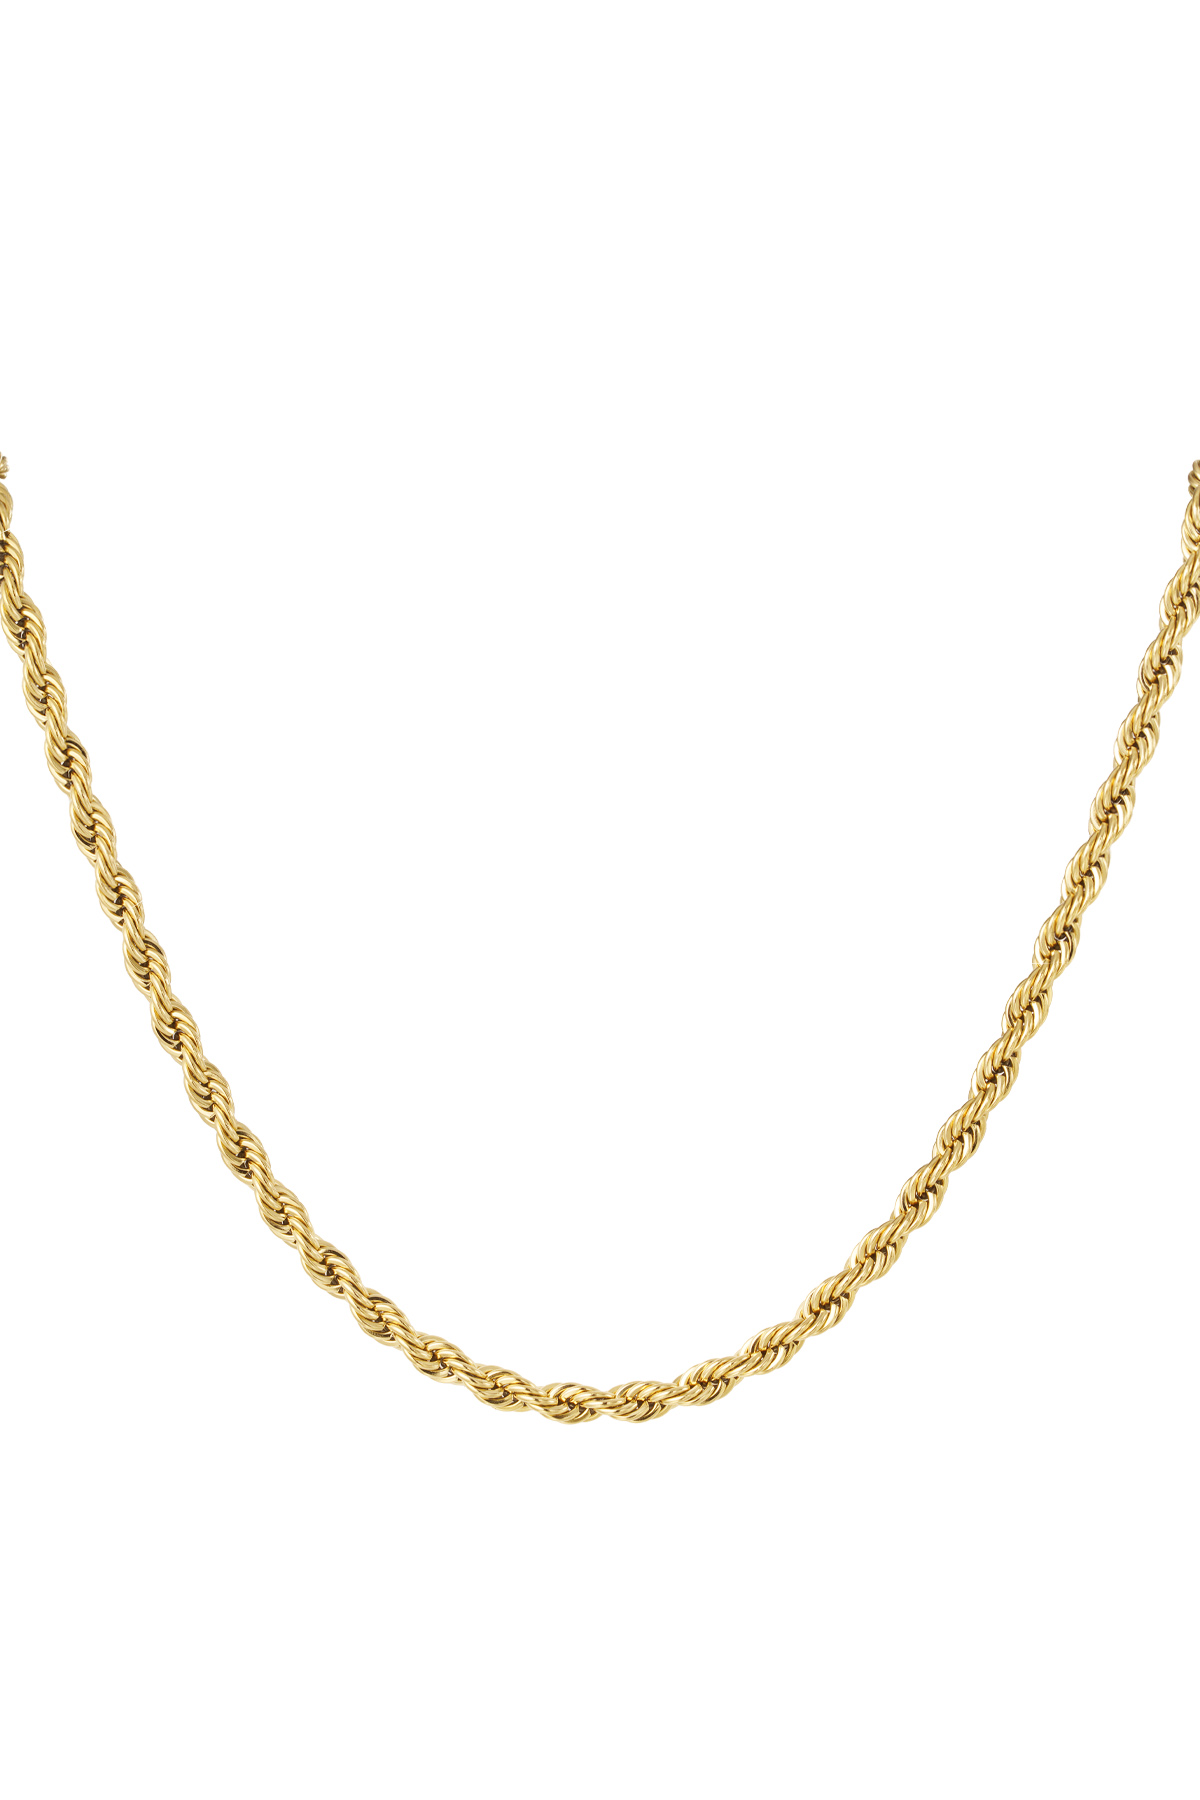 Unisex-Halskette, dick gedreht, 60 cm – Gold – 4,5 mm h5 